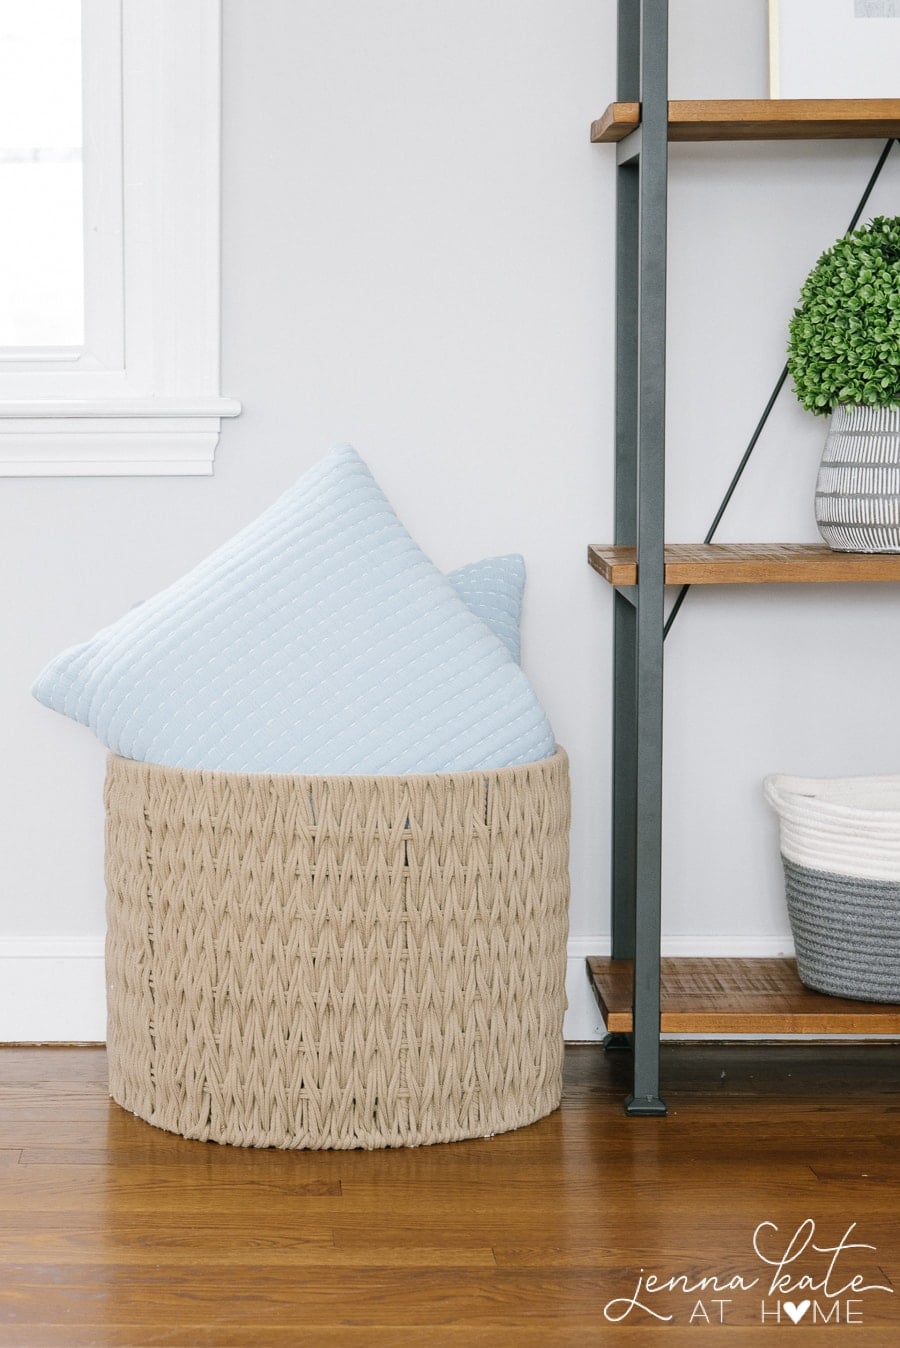 A large wicker basket holding light blue throw pillows